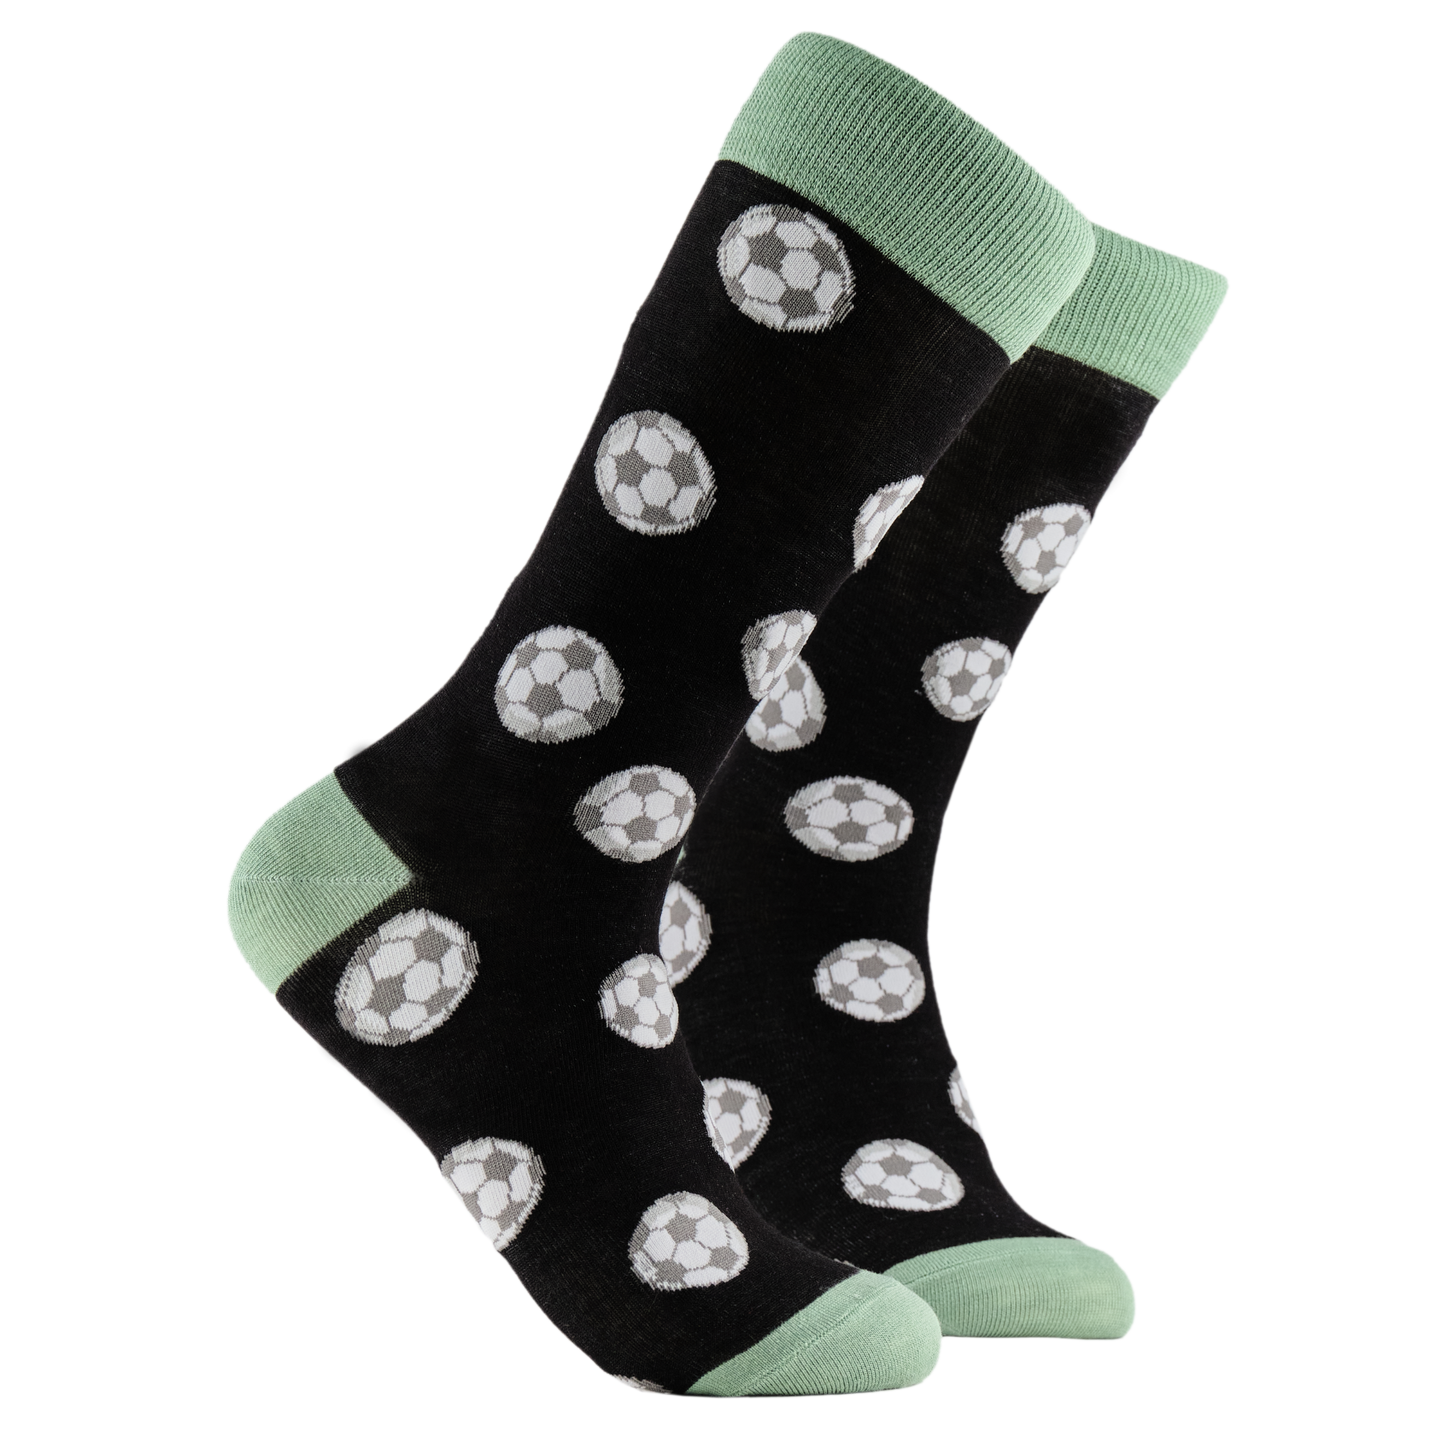 Footballs Bamboo Socks. A pair of socks depicting footballs. Black legs, light green cuff, heel and toe.